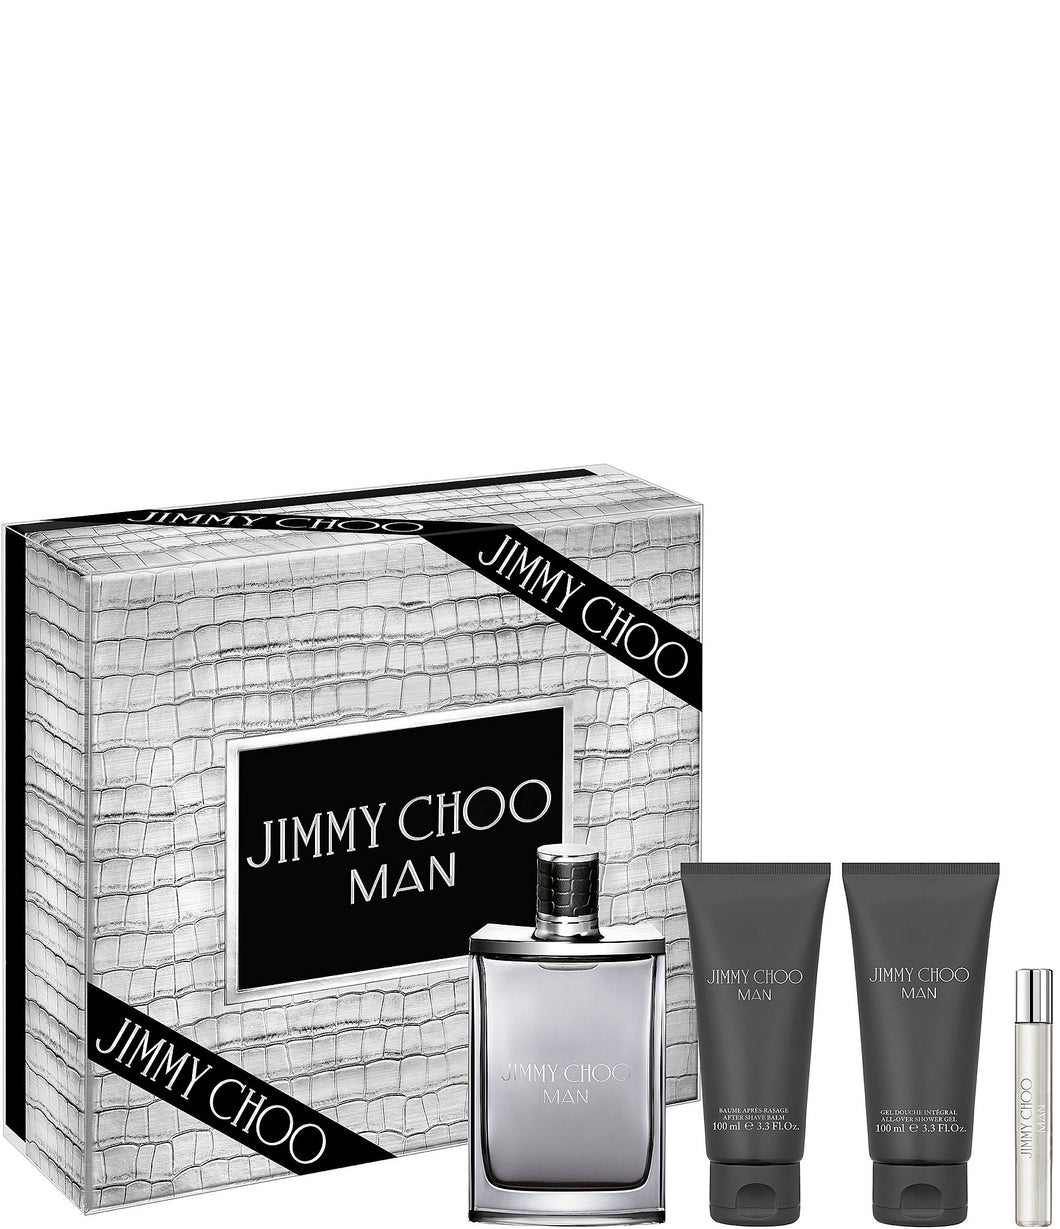 Jimmy Choo Man 4 Piece Gift Set